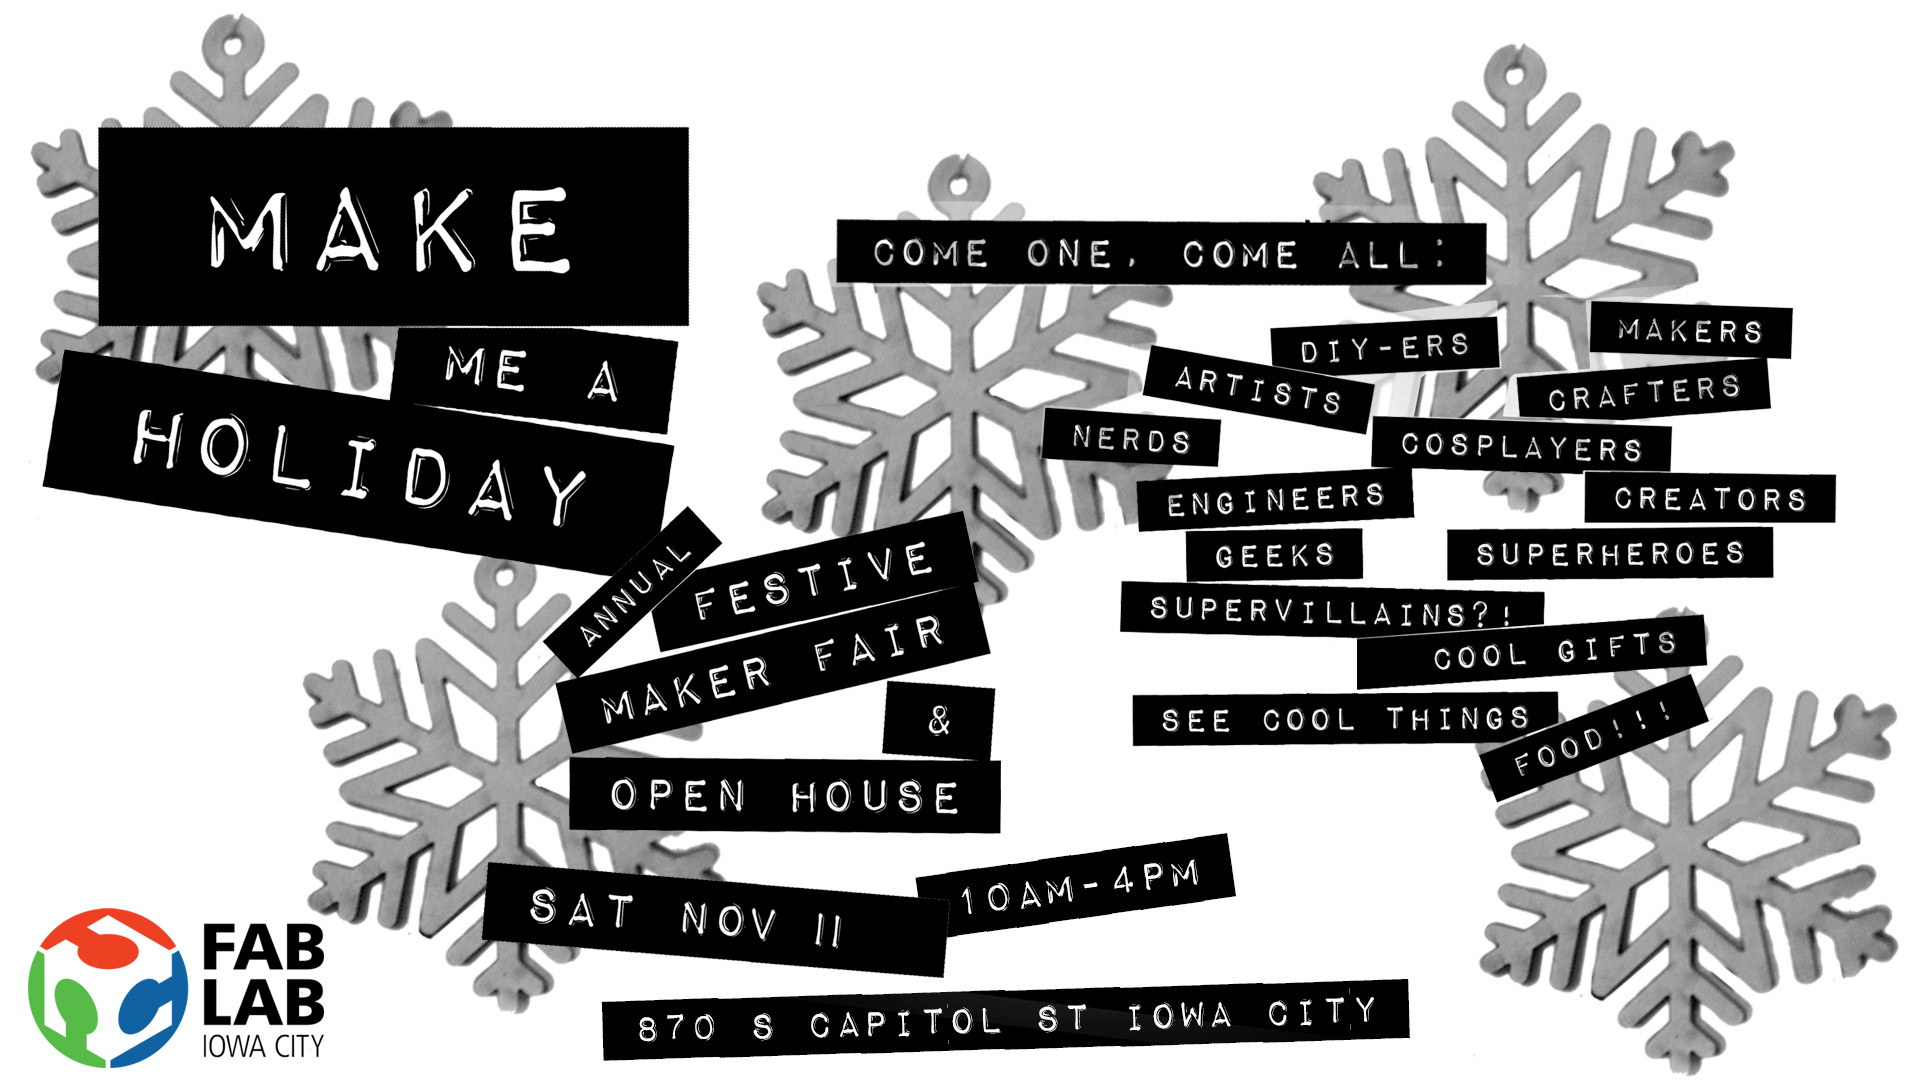 Make Me A Holiday: Annual Festive Maker Fair & Open House